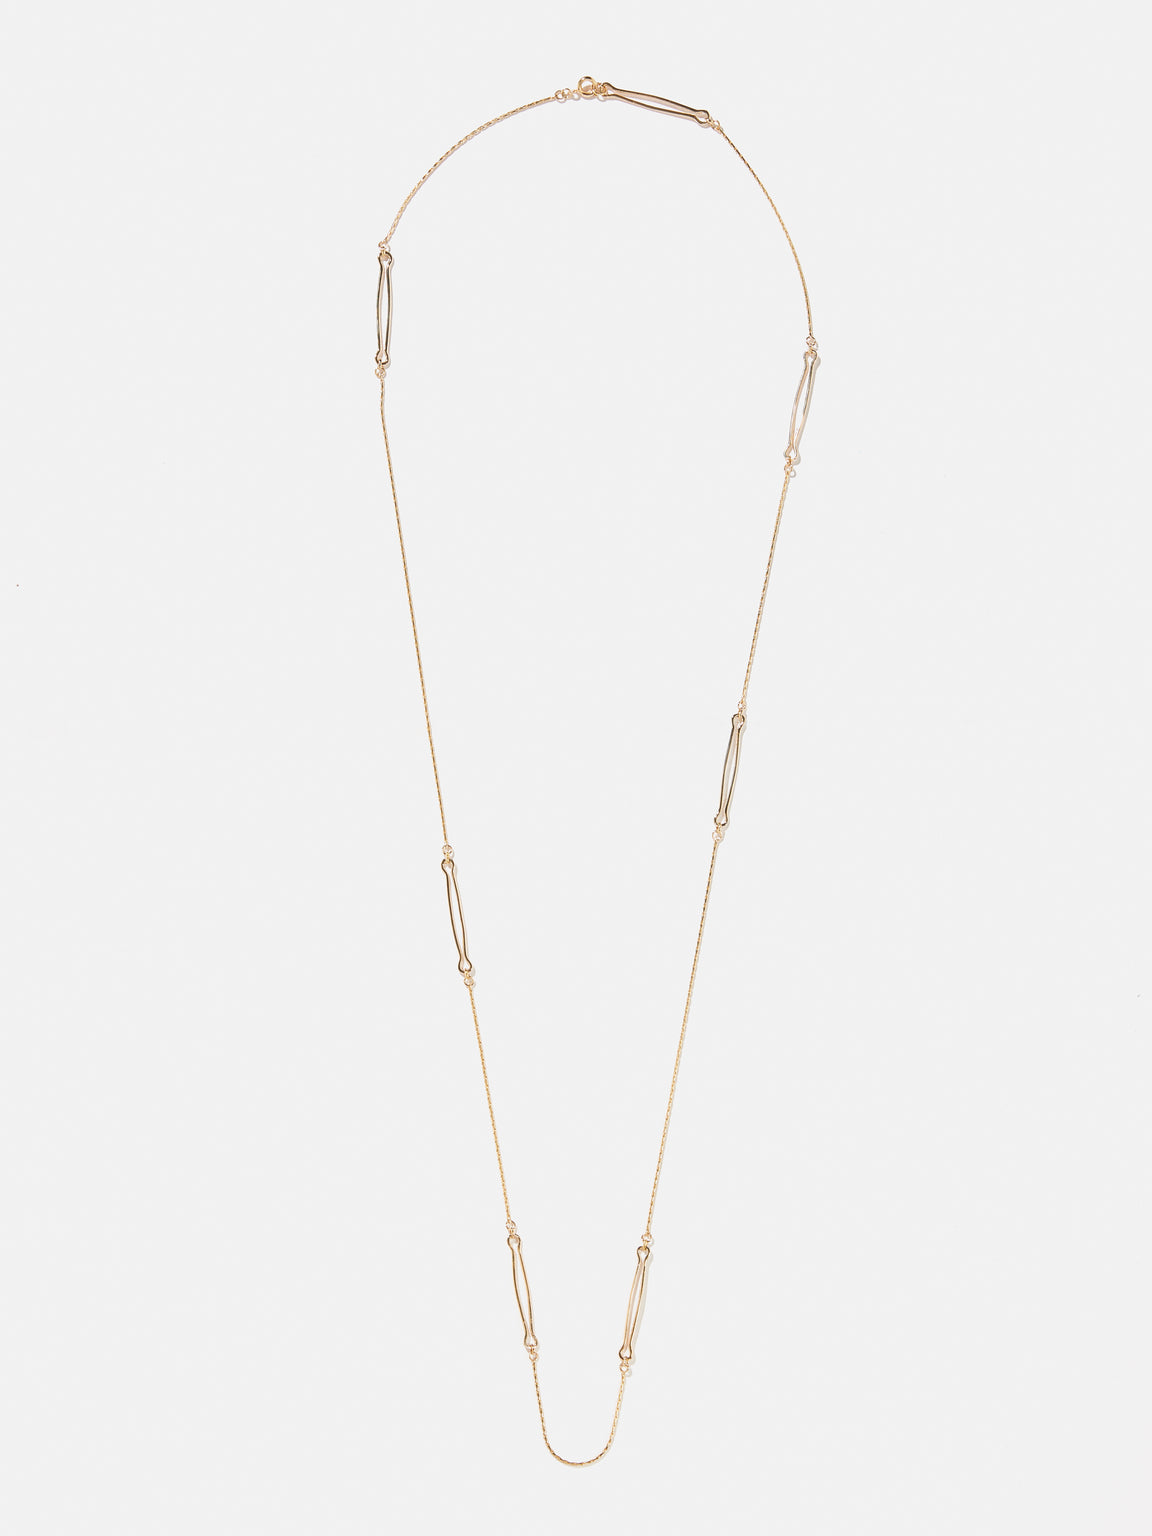 Helena Rohner | Fine Gold Plated Brass Links Long Necklace | Bellerose E-shop